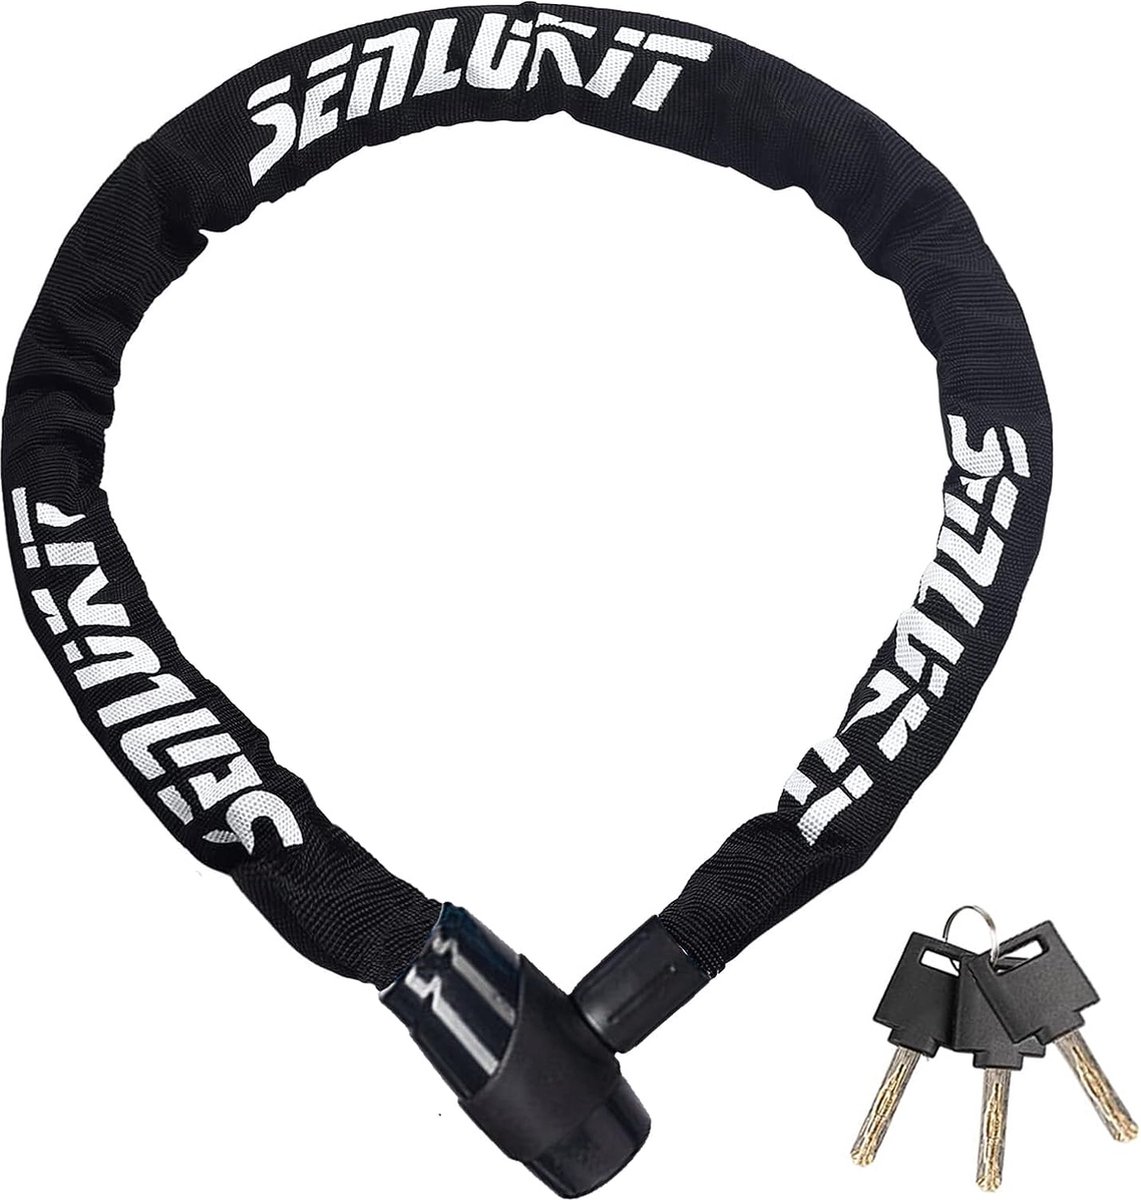 Zwart Senlu fietsslot met 3 sleutels - Hoog beveiligingsniveau kettingslot - Scooterslot, antidiefstalslot, motorfiets, brommerslot